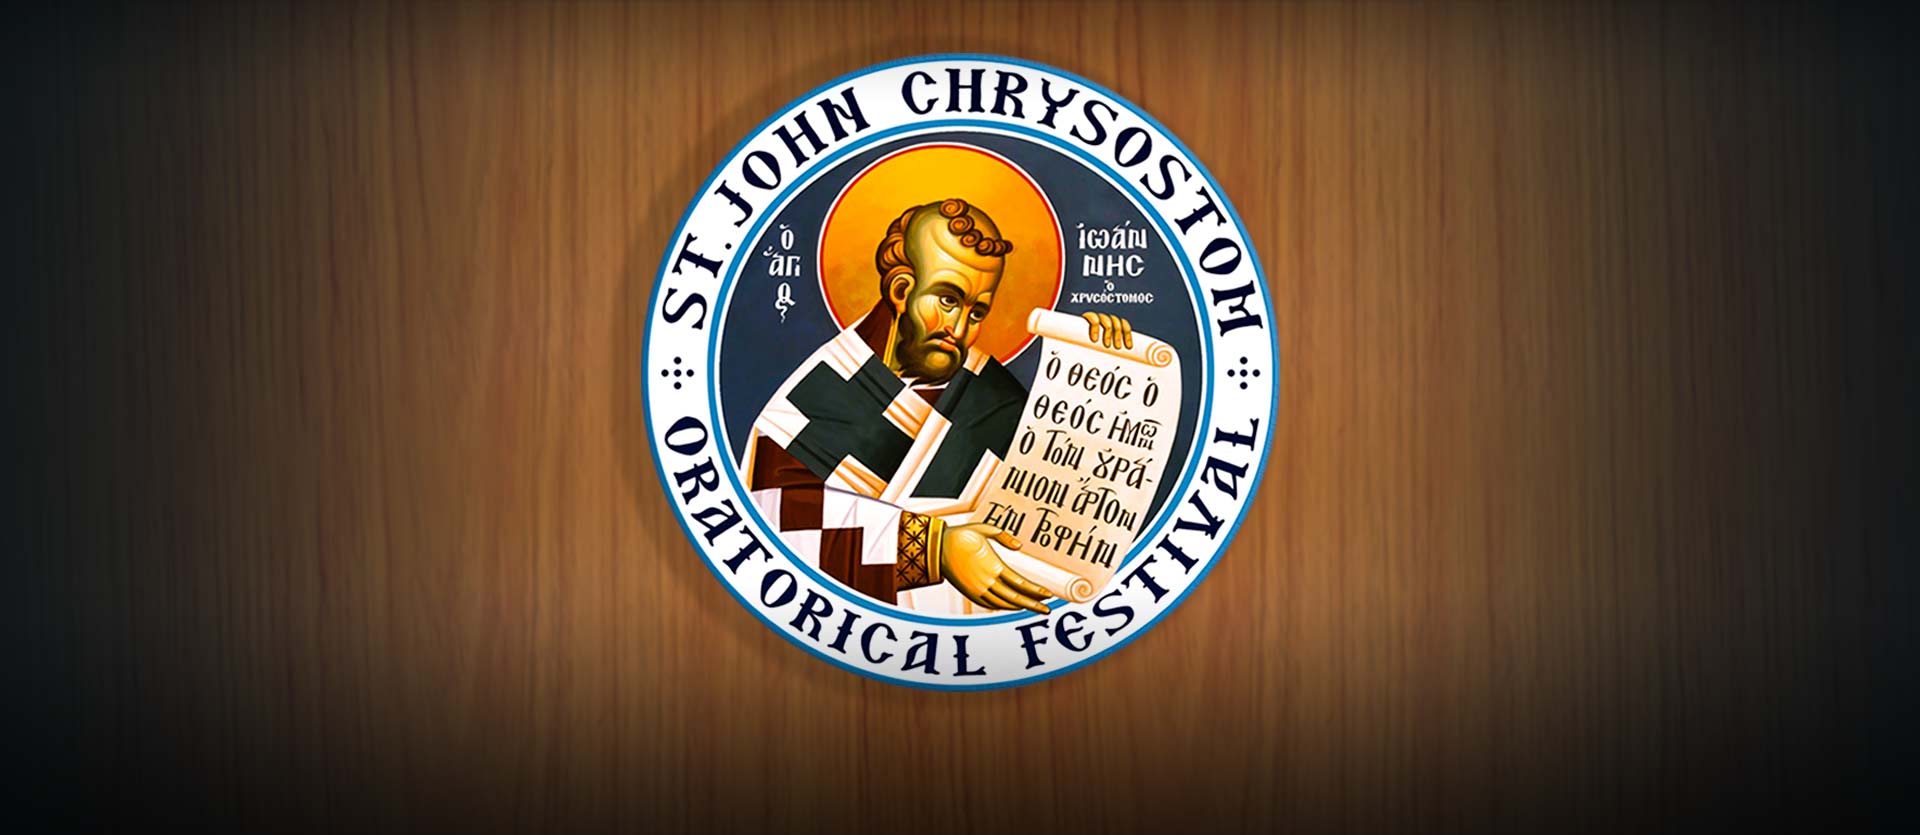 St. John Chrysostom Oratorical Festival Greek Orthodox Archdiocese of